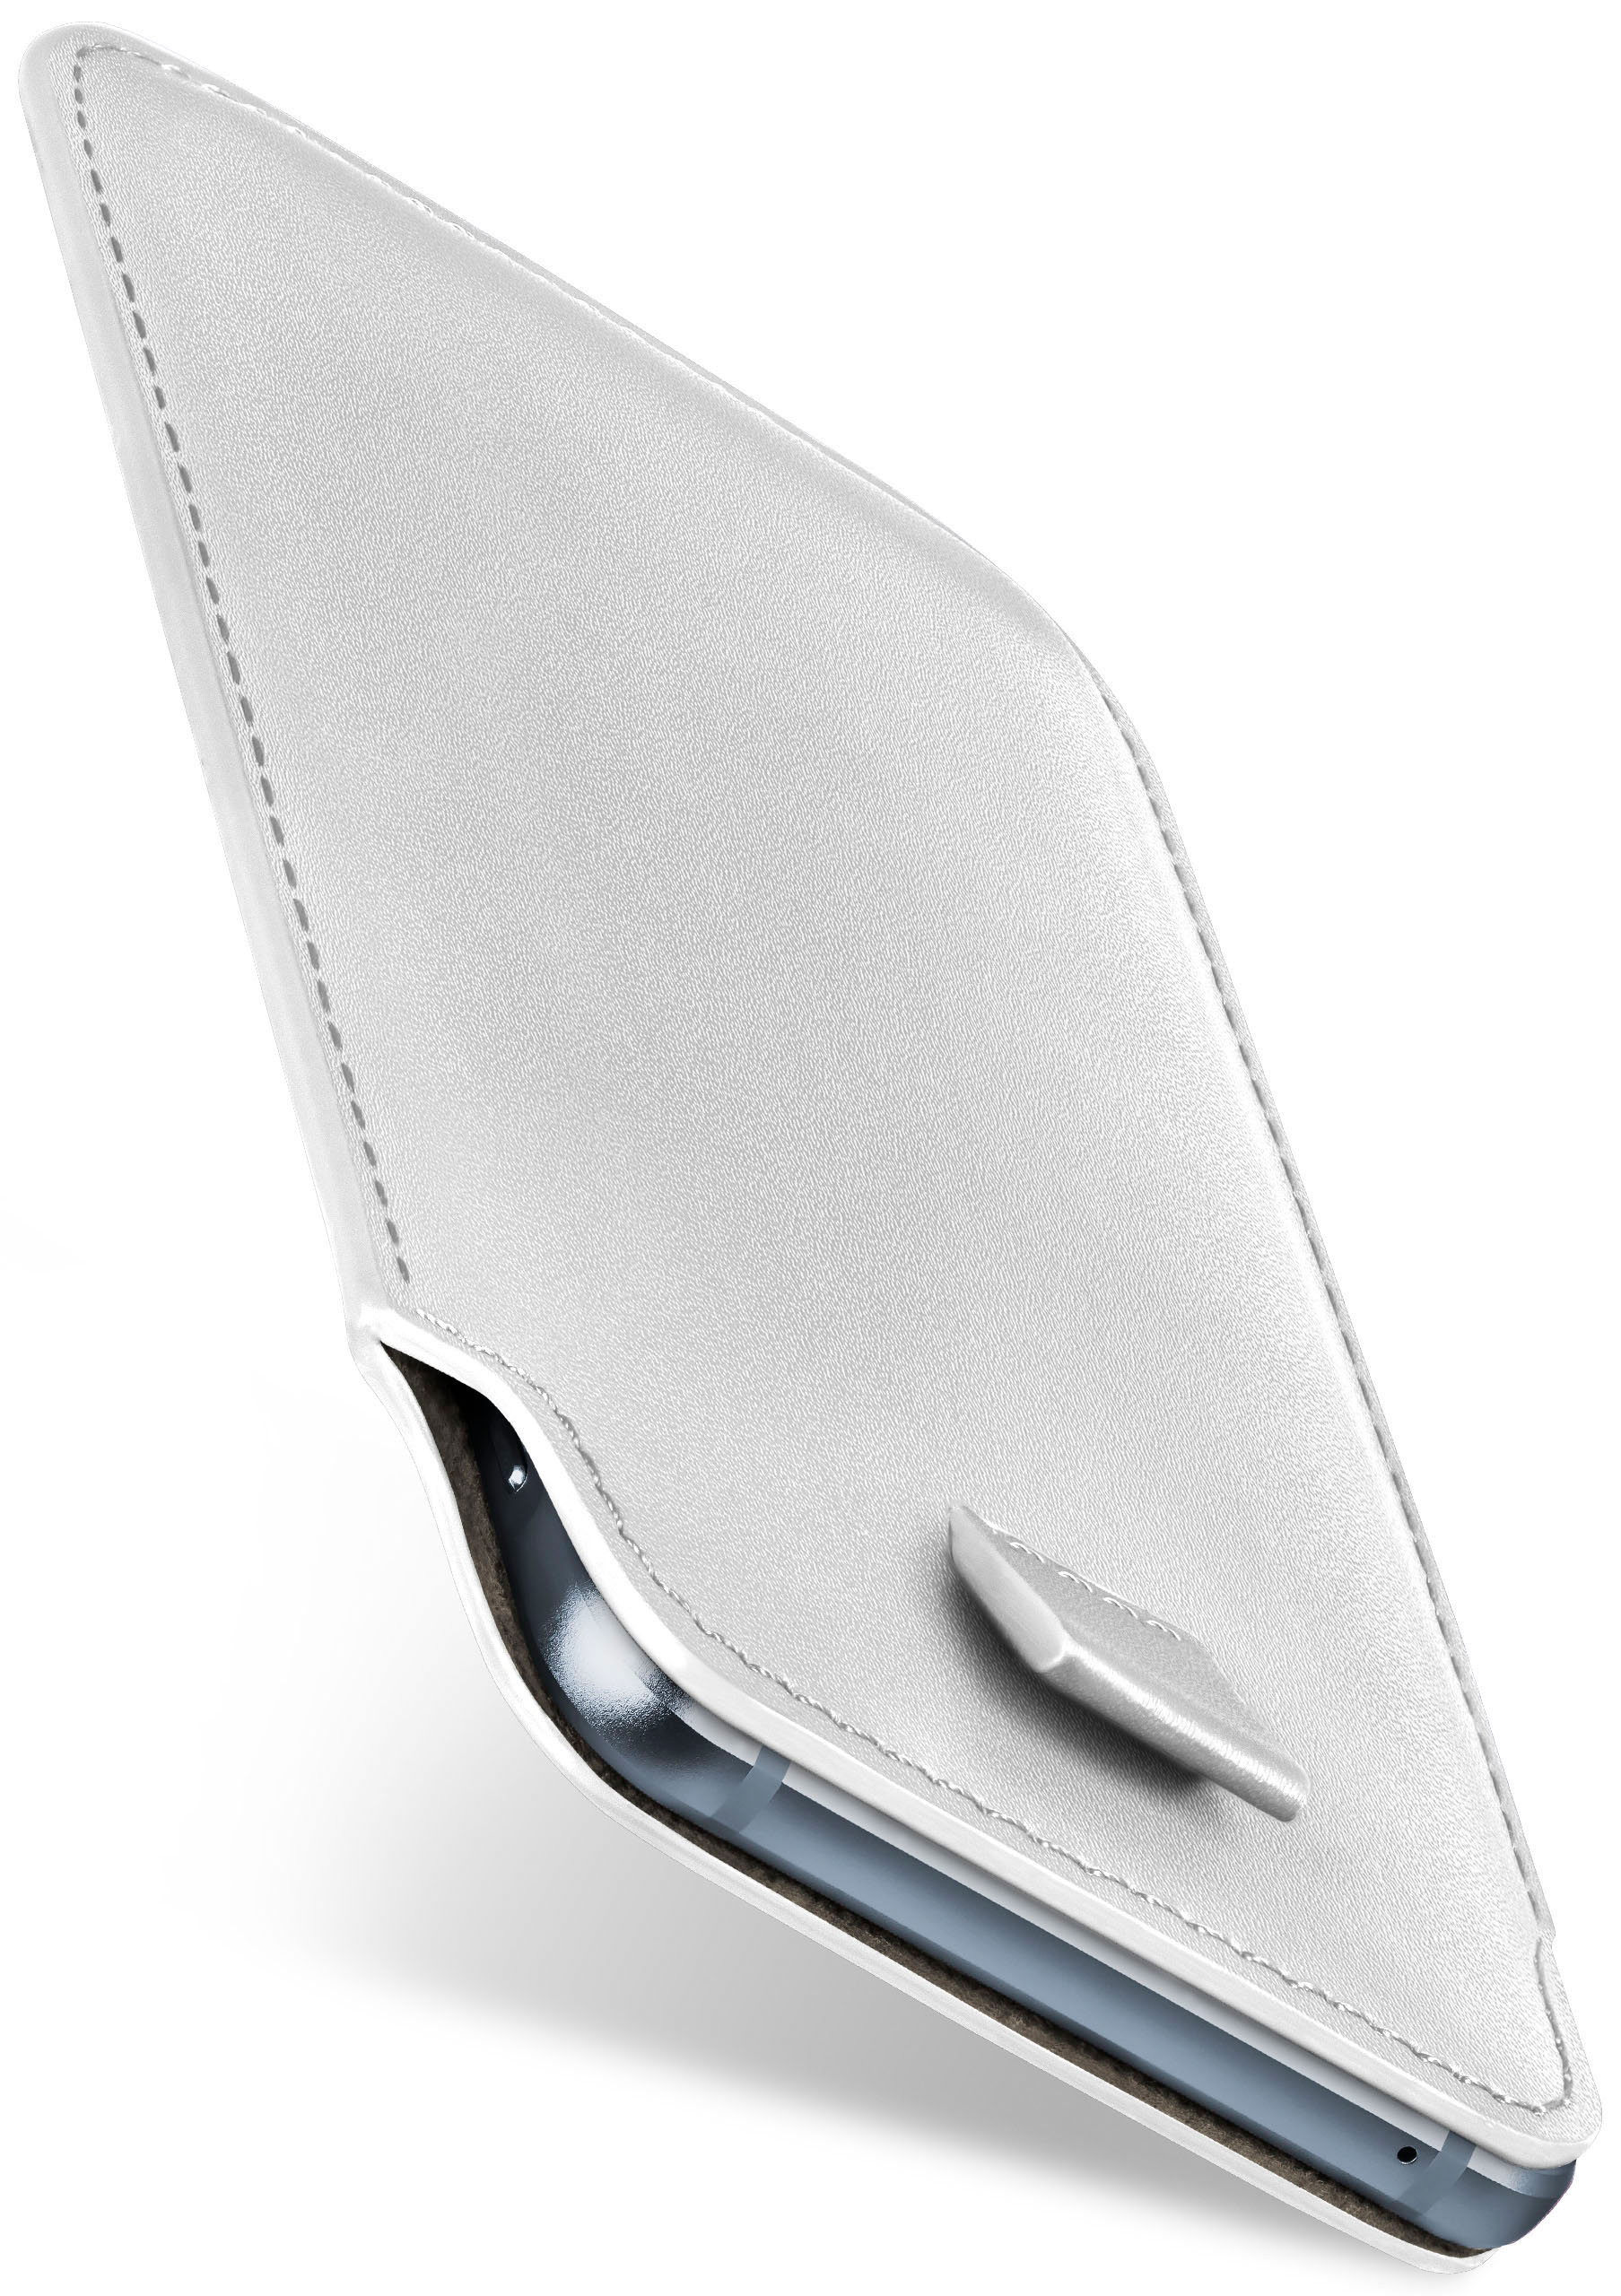 Case, / Nokia, Slide Lumia Shiny-White Cover, MOEX Full 635, 630